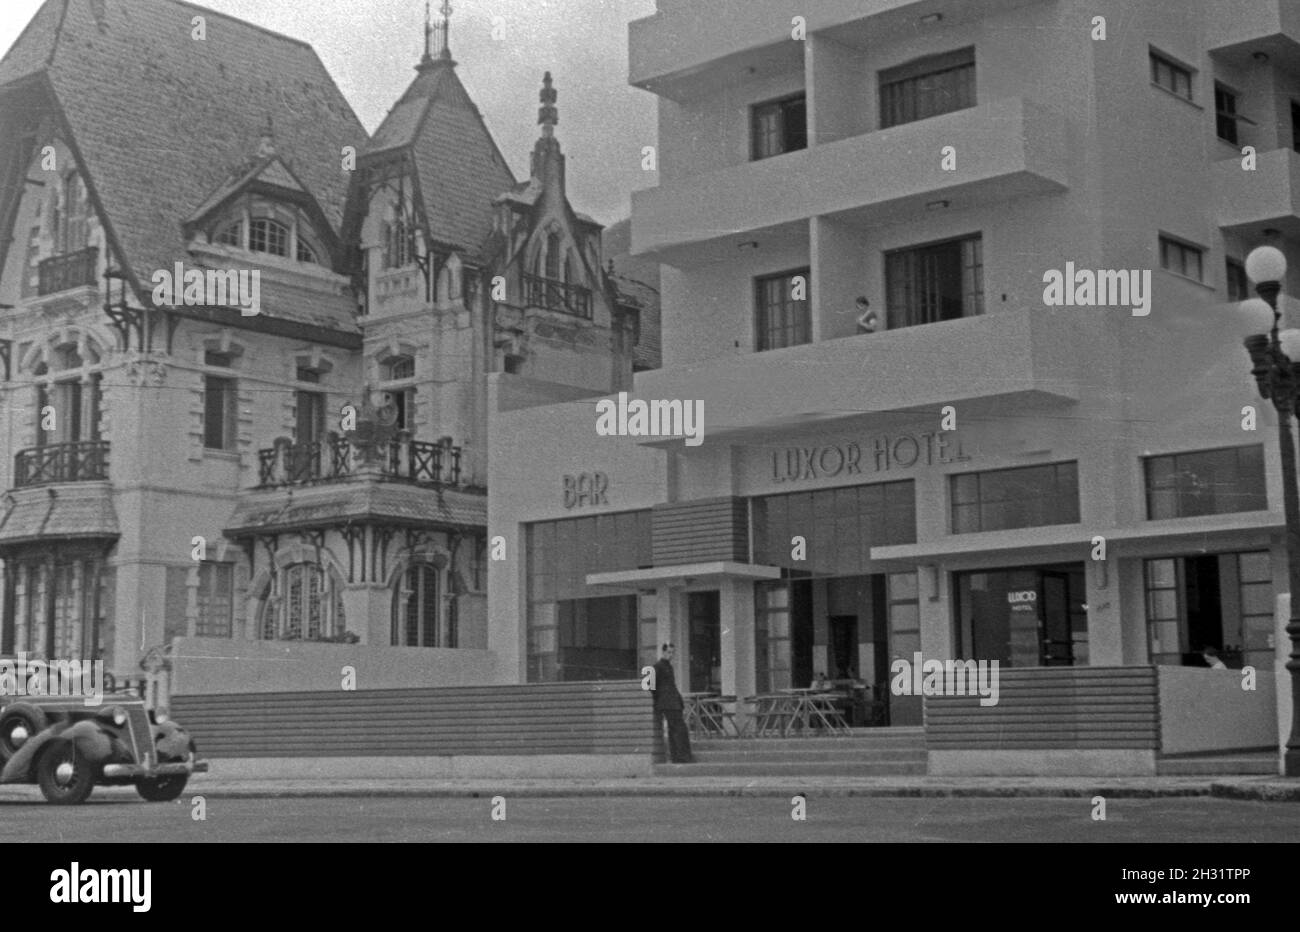 Das moderne Bauhaus Hotel Luxor neben einem Altbau gründerzeitlichen à Rio de Janeiro, Brésil 1930er Jahre. Bauhaus hotel moderne "Luxor" à côté d'un bâtiment de style 'Gruenderzeit' à Rio de Janeiro, Brésil 1930. Banque D'Images